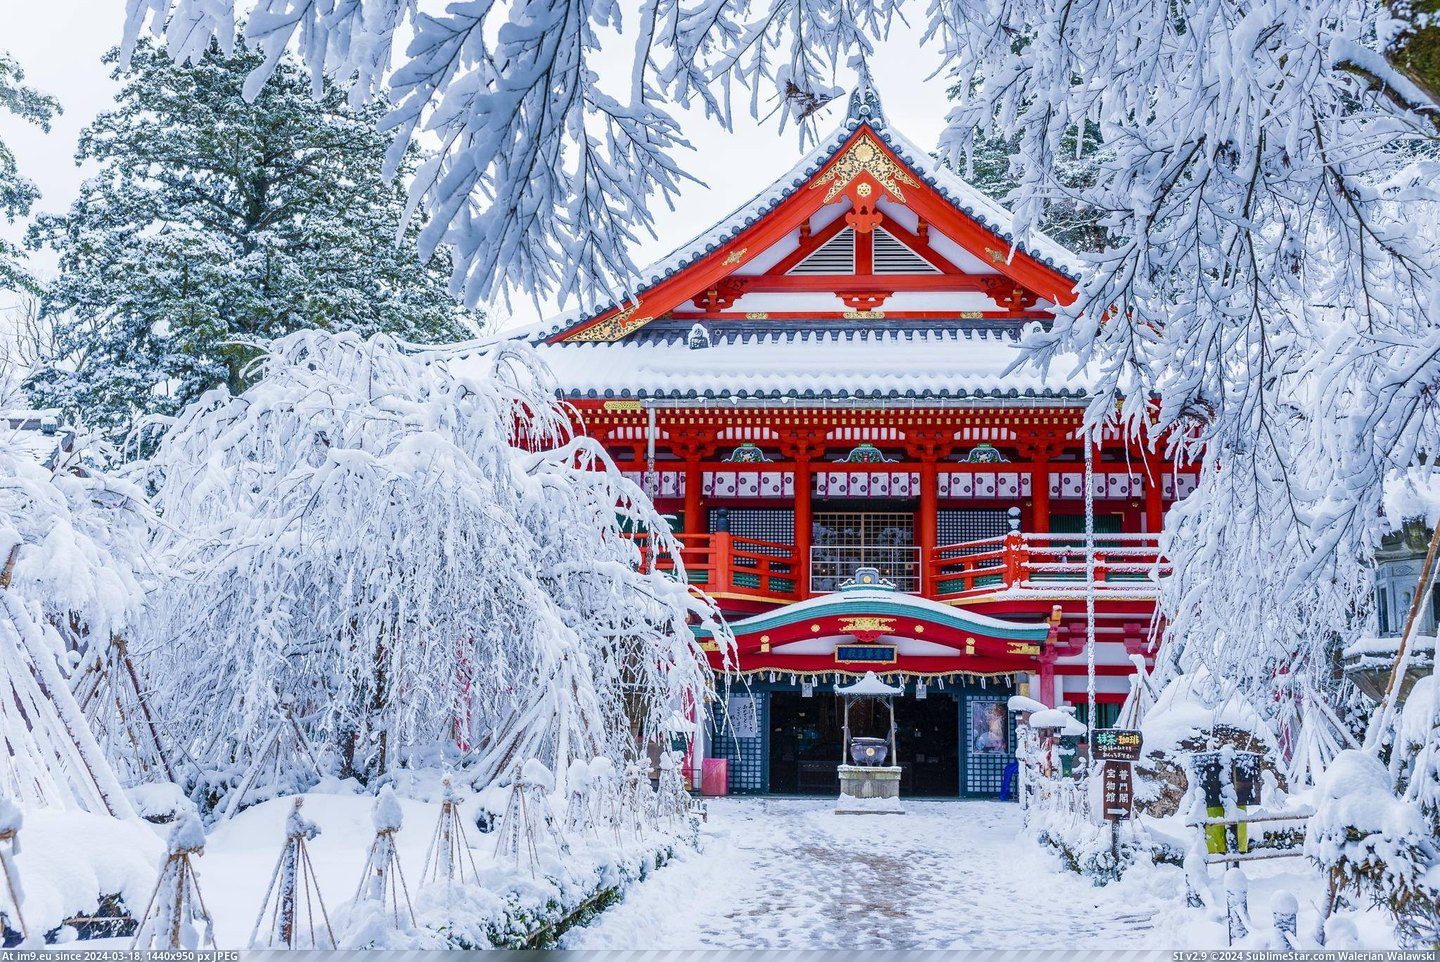 #Winter #Temple #Natadera #Japan [Pics] Natadera Temple in winter, Japan Pic. (Obraz z album My r/PICS favs))